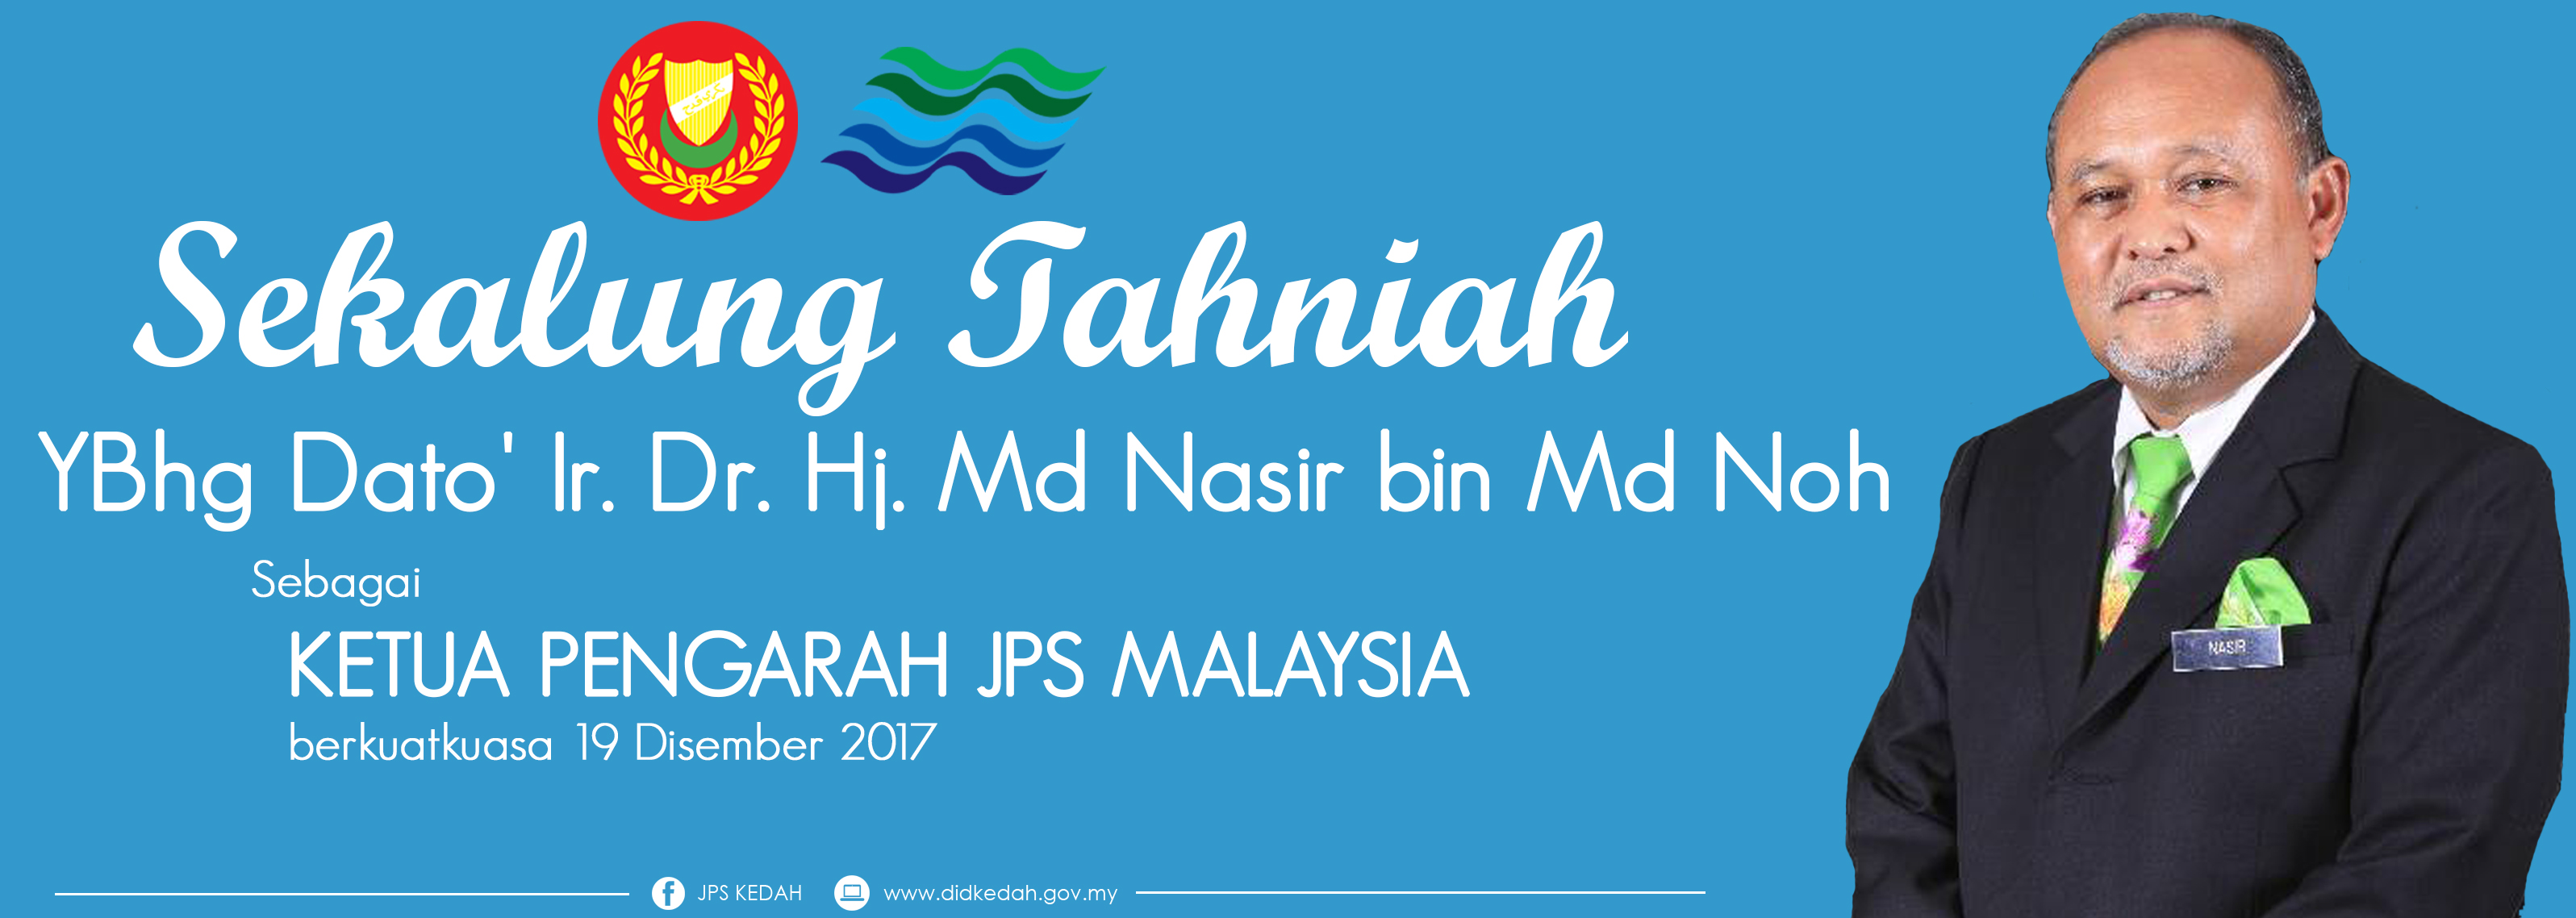 banner TAHNIAHKetuaPengarahJPSMALAYSIA2017